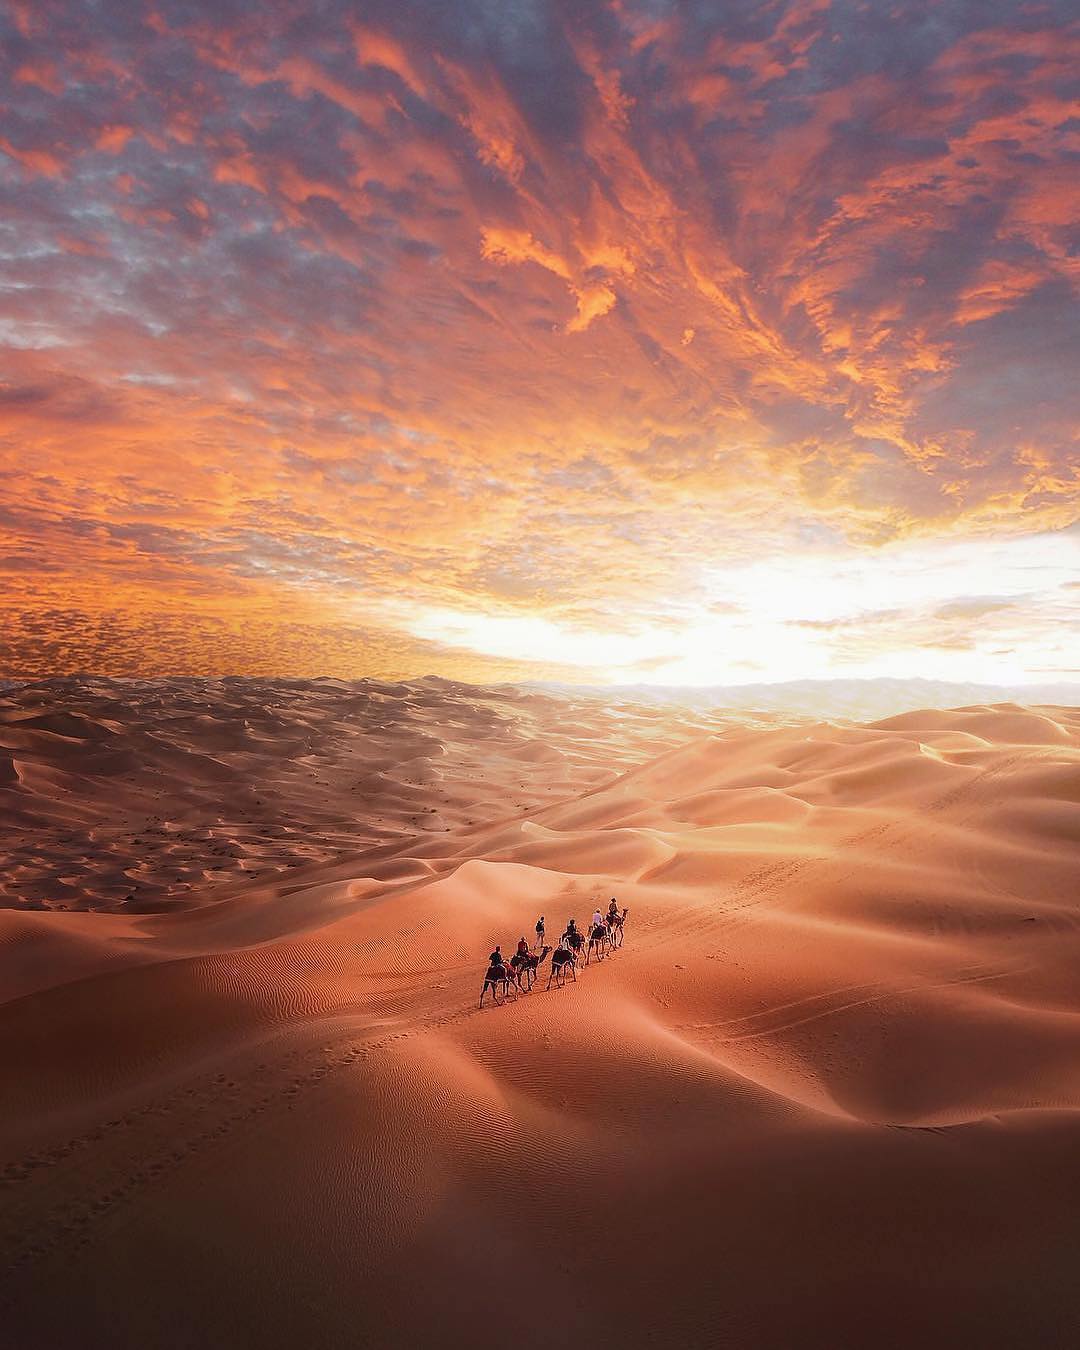 Riding through the desert as the sun goes down - AbuDhabi.jpg